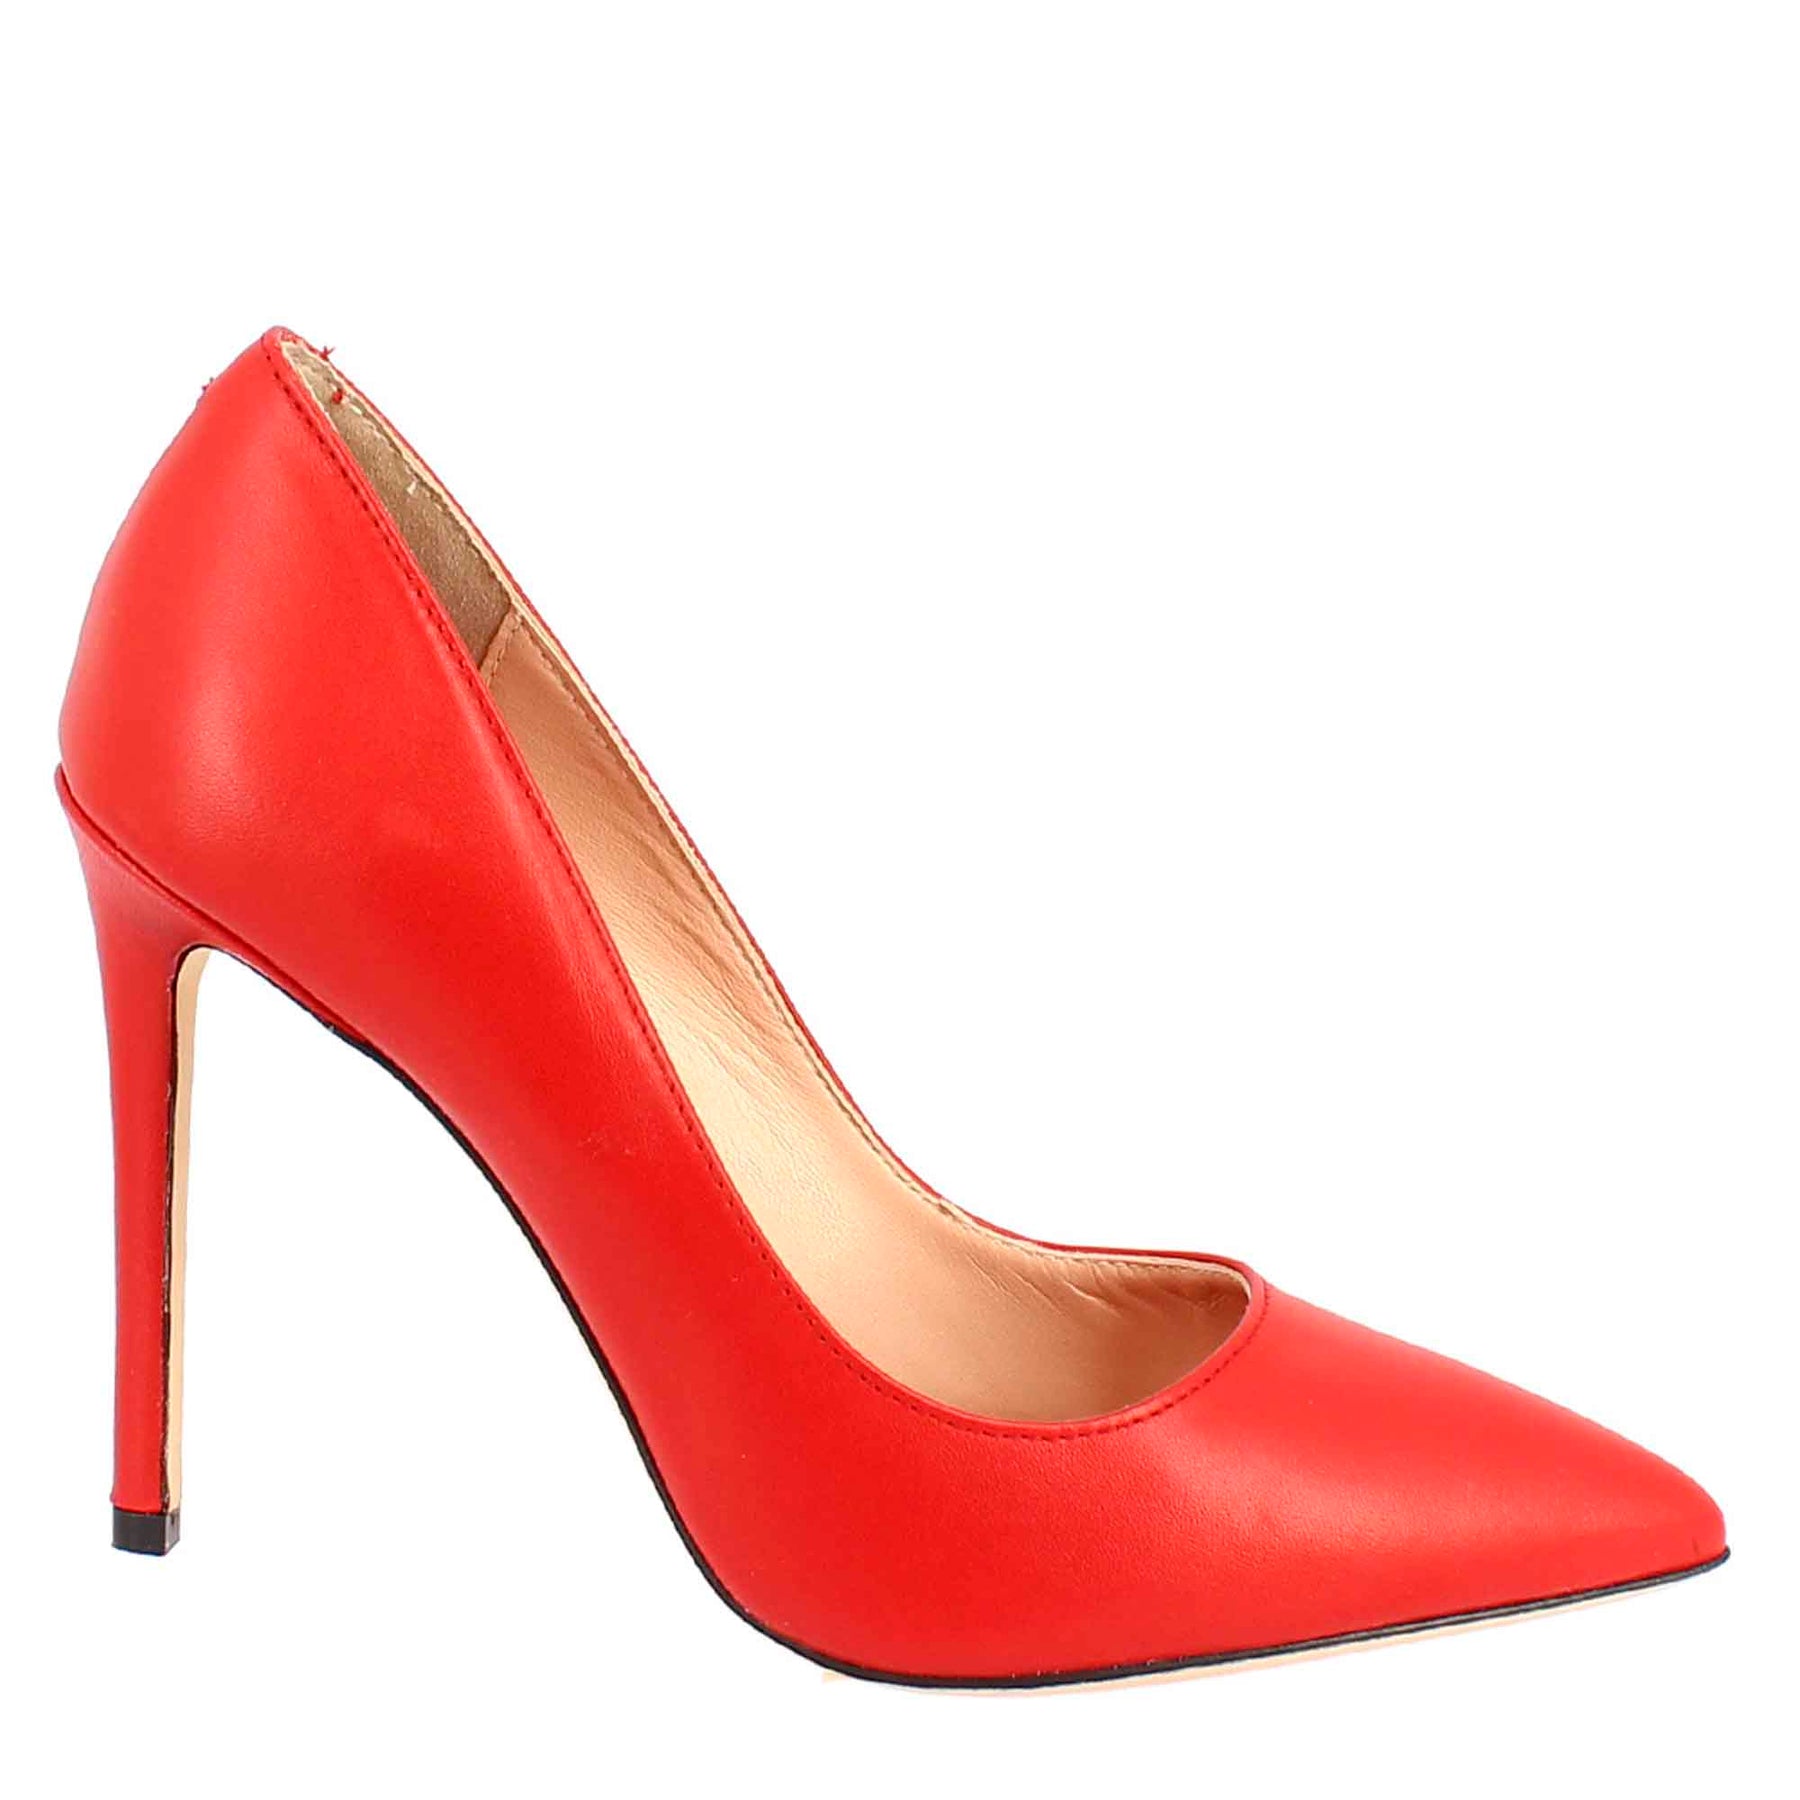 Block-heeled Mary Janes - Red - Ladies | H&M IN